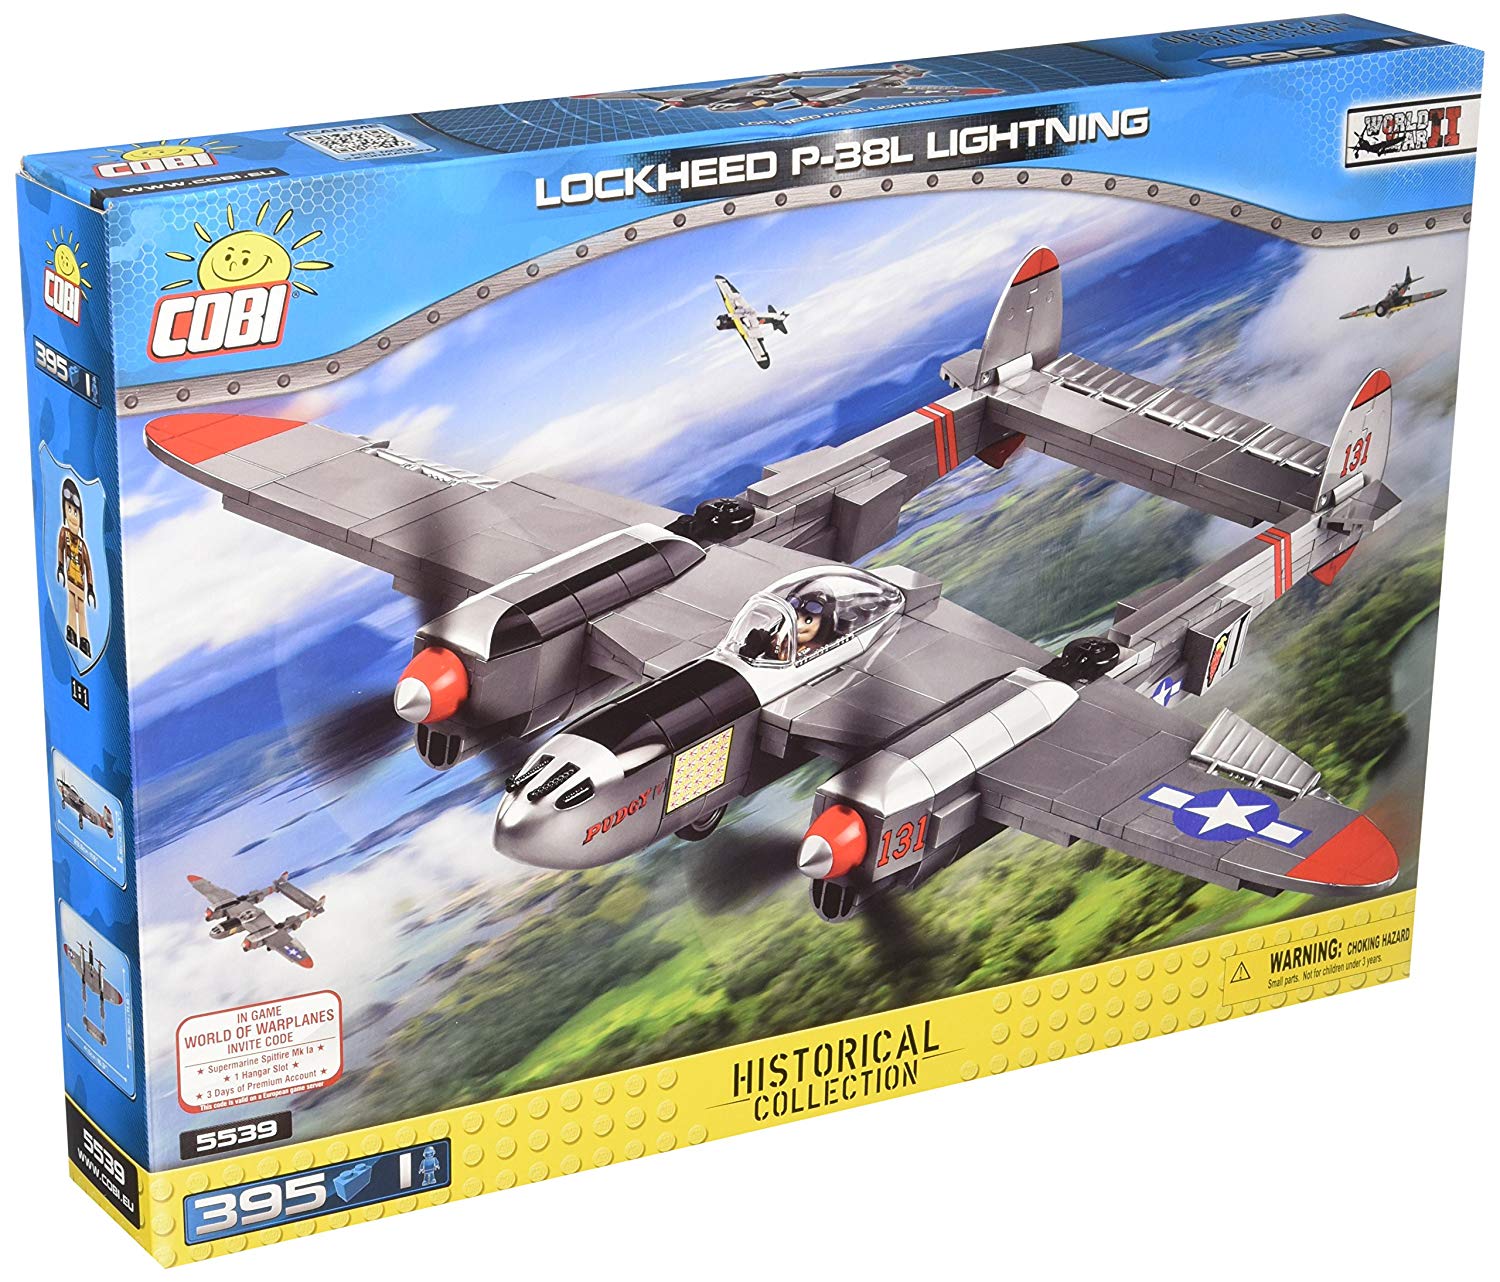 Cobi 5539 Lockheed P 38L Lightning Construction Toy, Grey, Black, Red